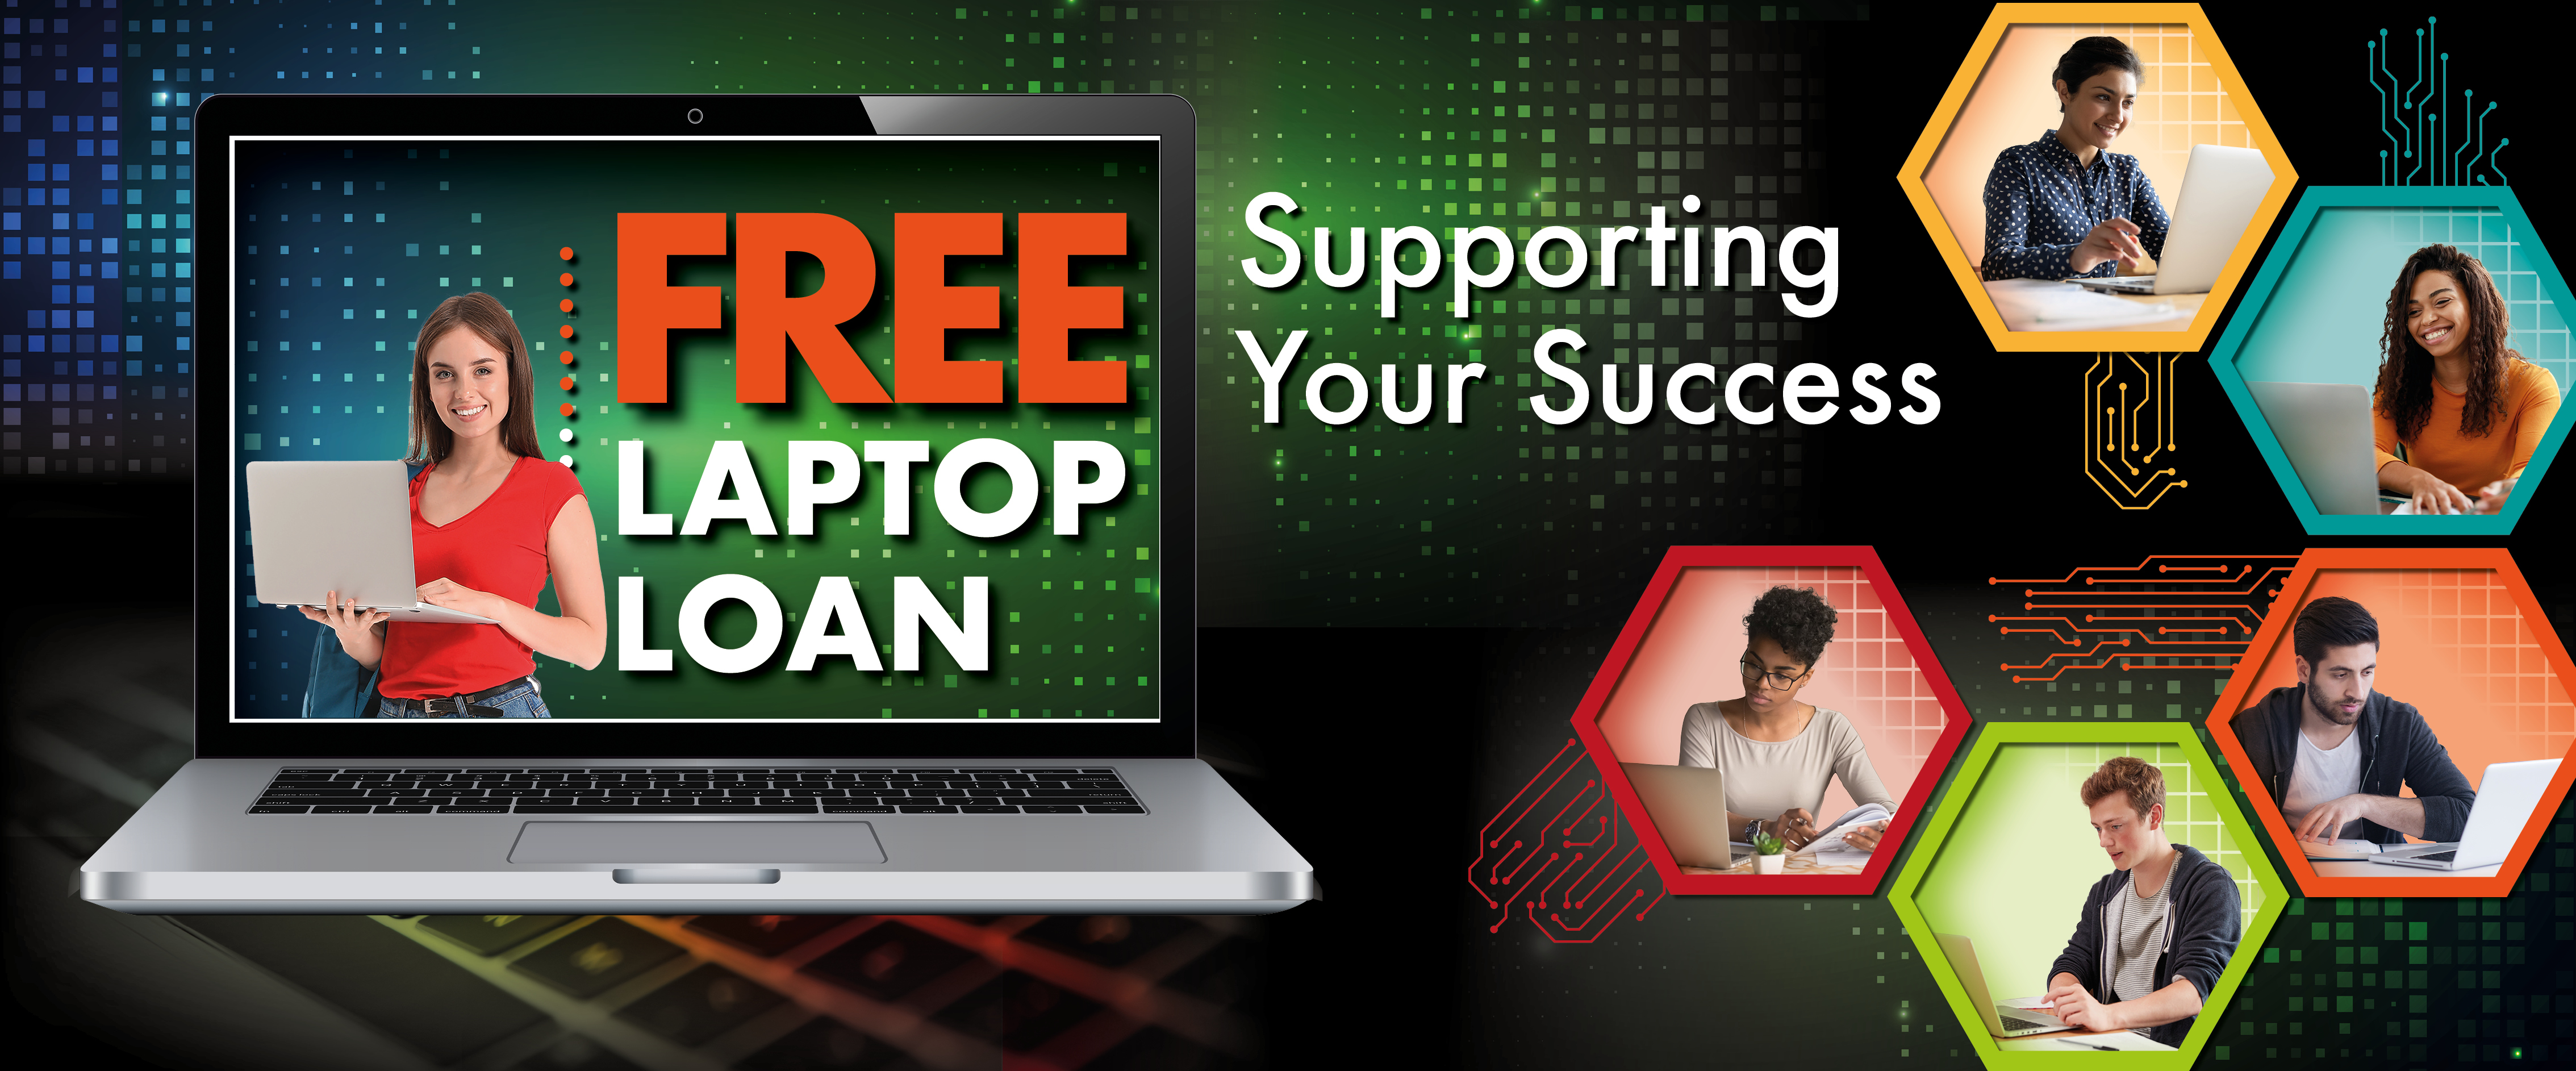 Free Laptop Loan